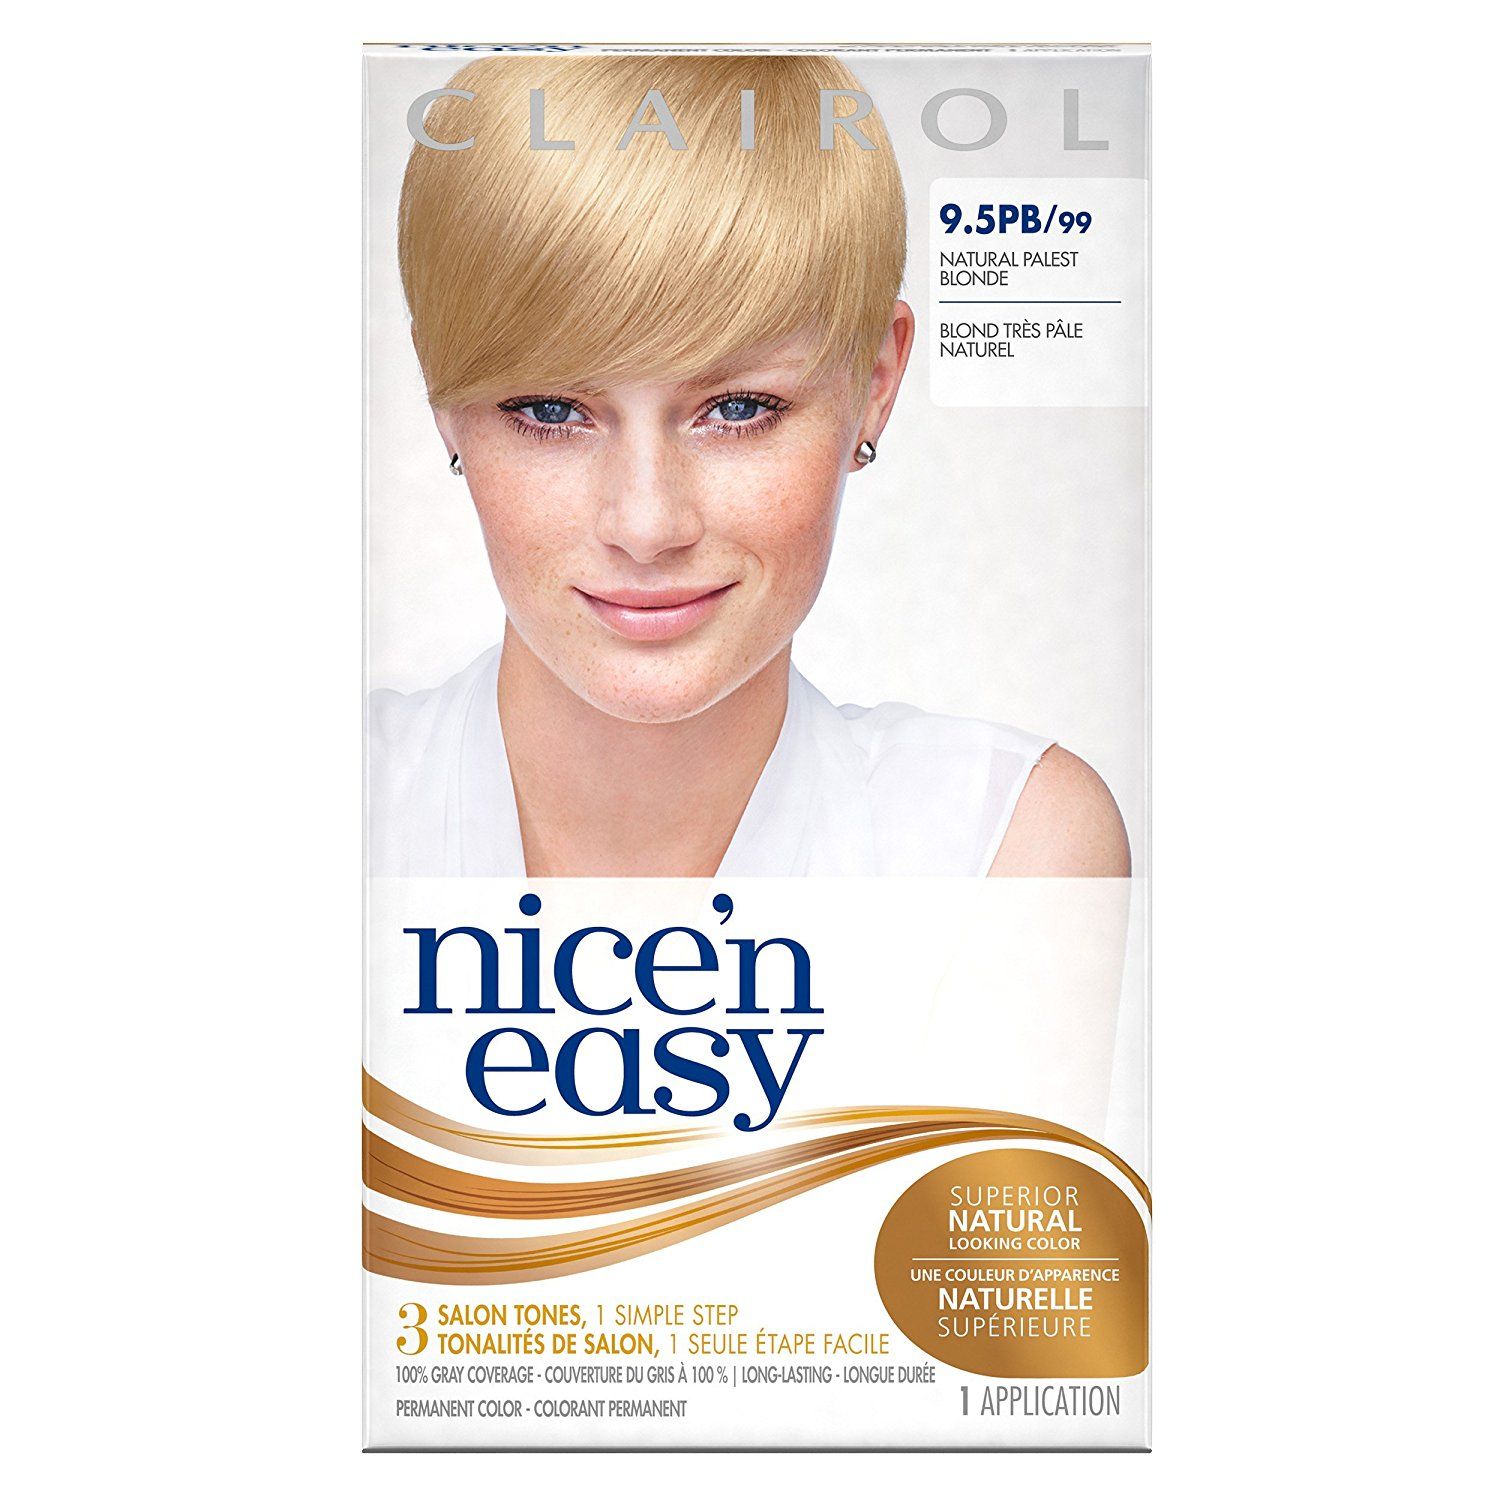 Clairol Nice'n Easy Permanent Hair Color 9.5BP/99 Natural Palest Blonde